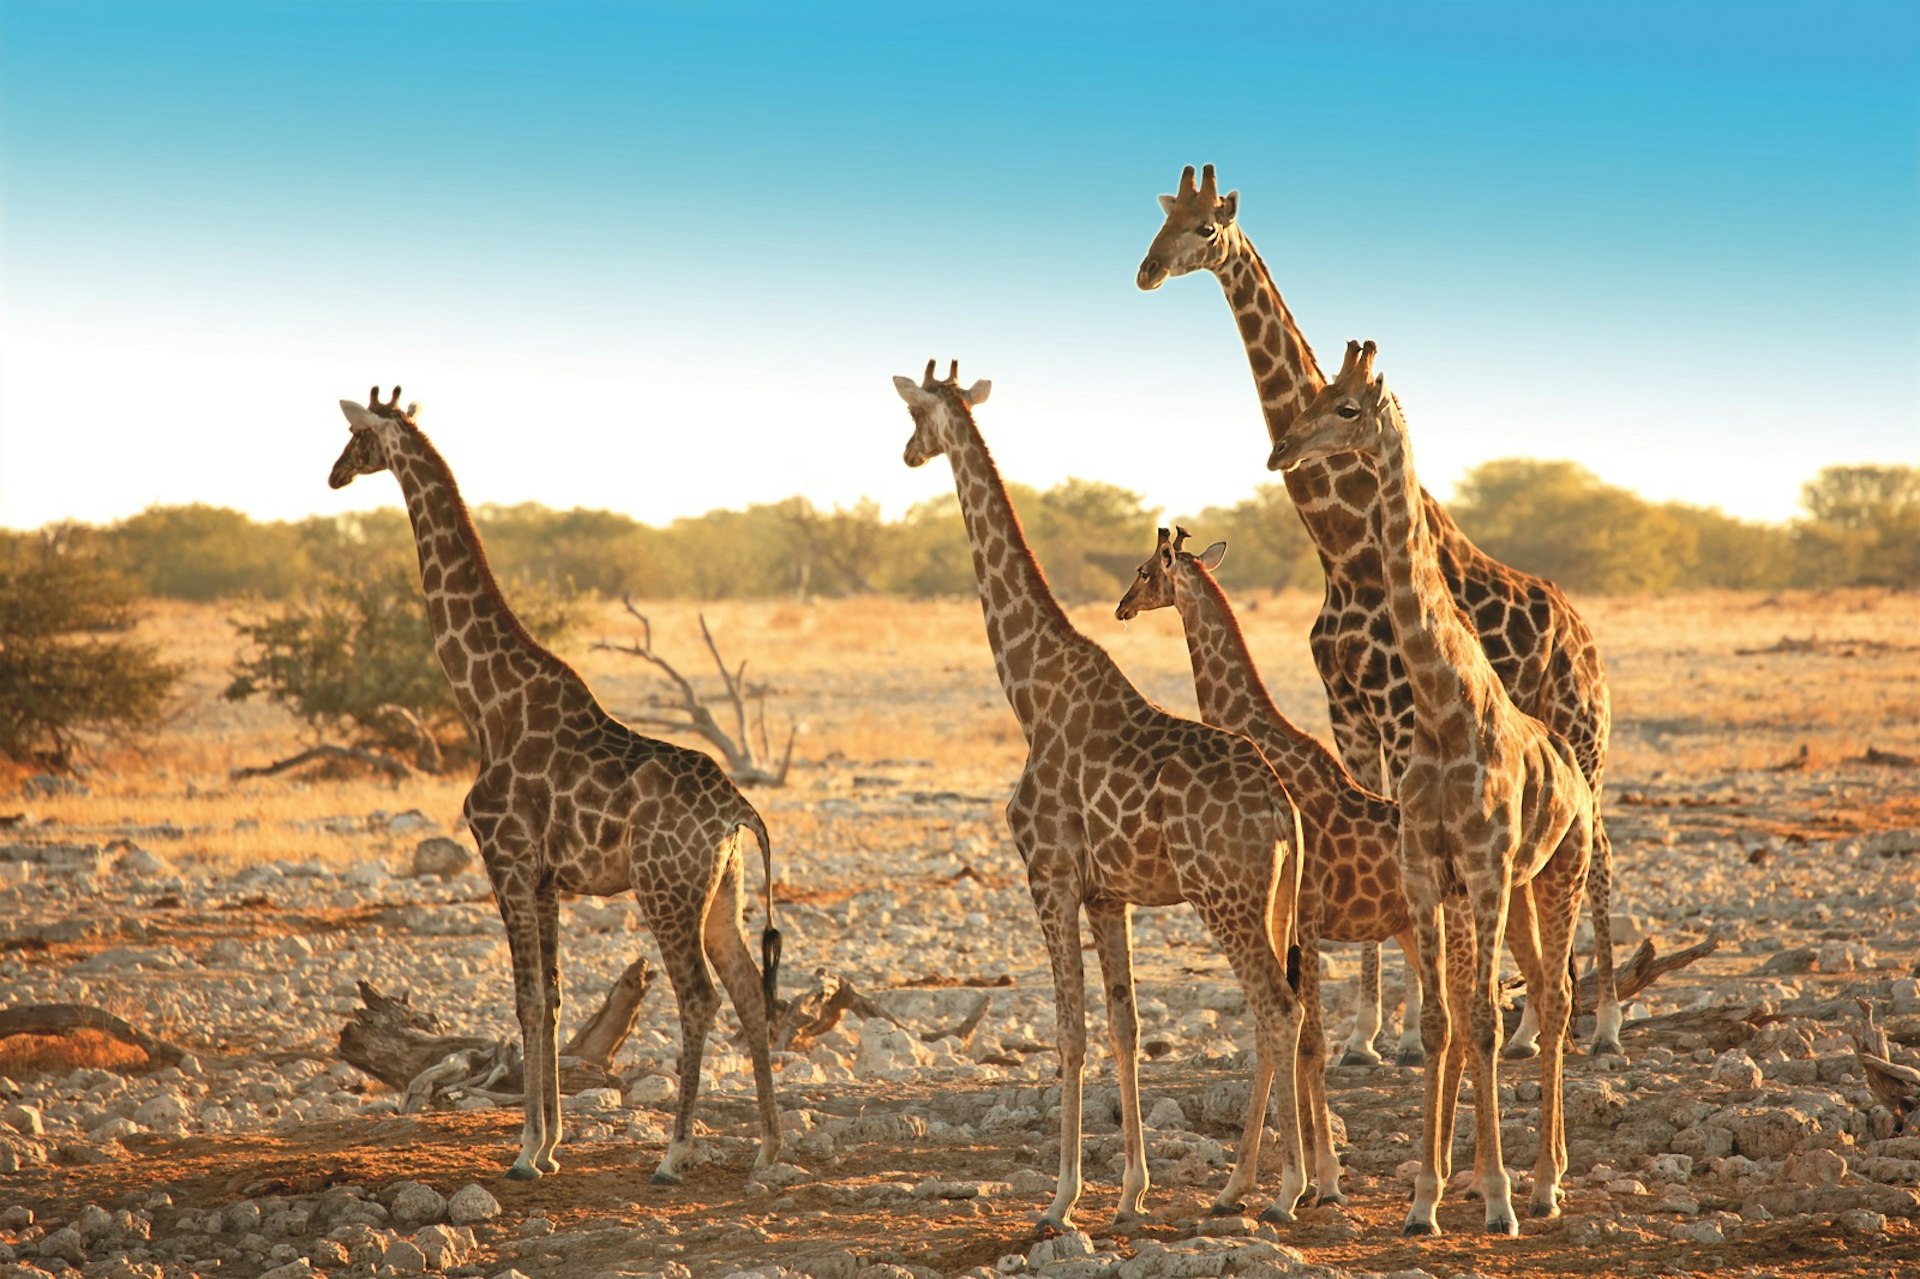 Family of five wild giraffes standing in a dry Savannah landscape near Okaukuejo waterhole in Etosha National Park in Namibia, Africa © Jurgar / Getty Images 